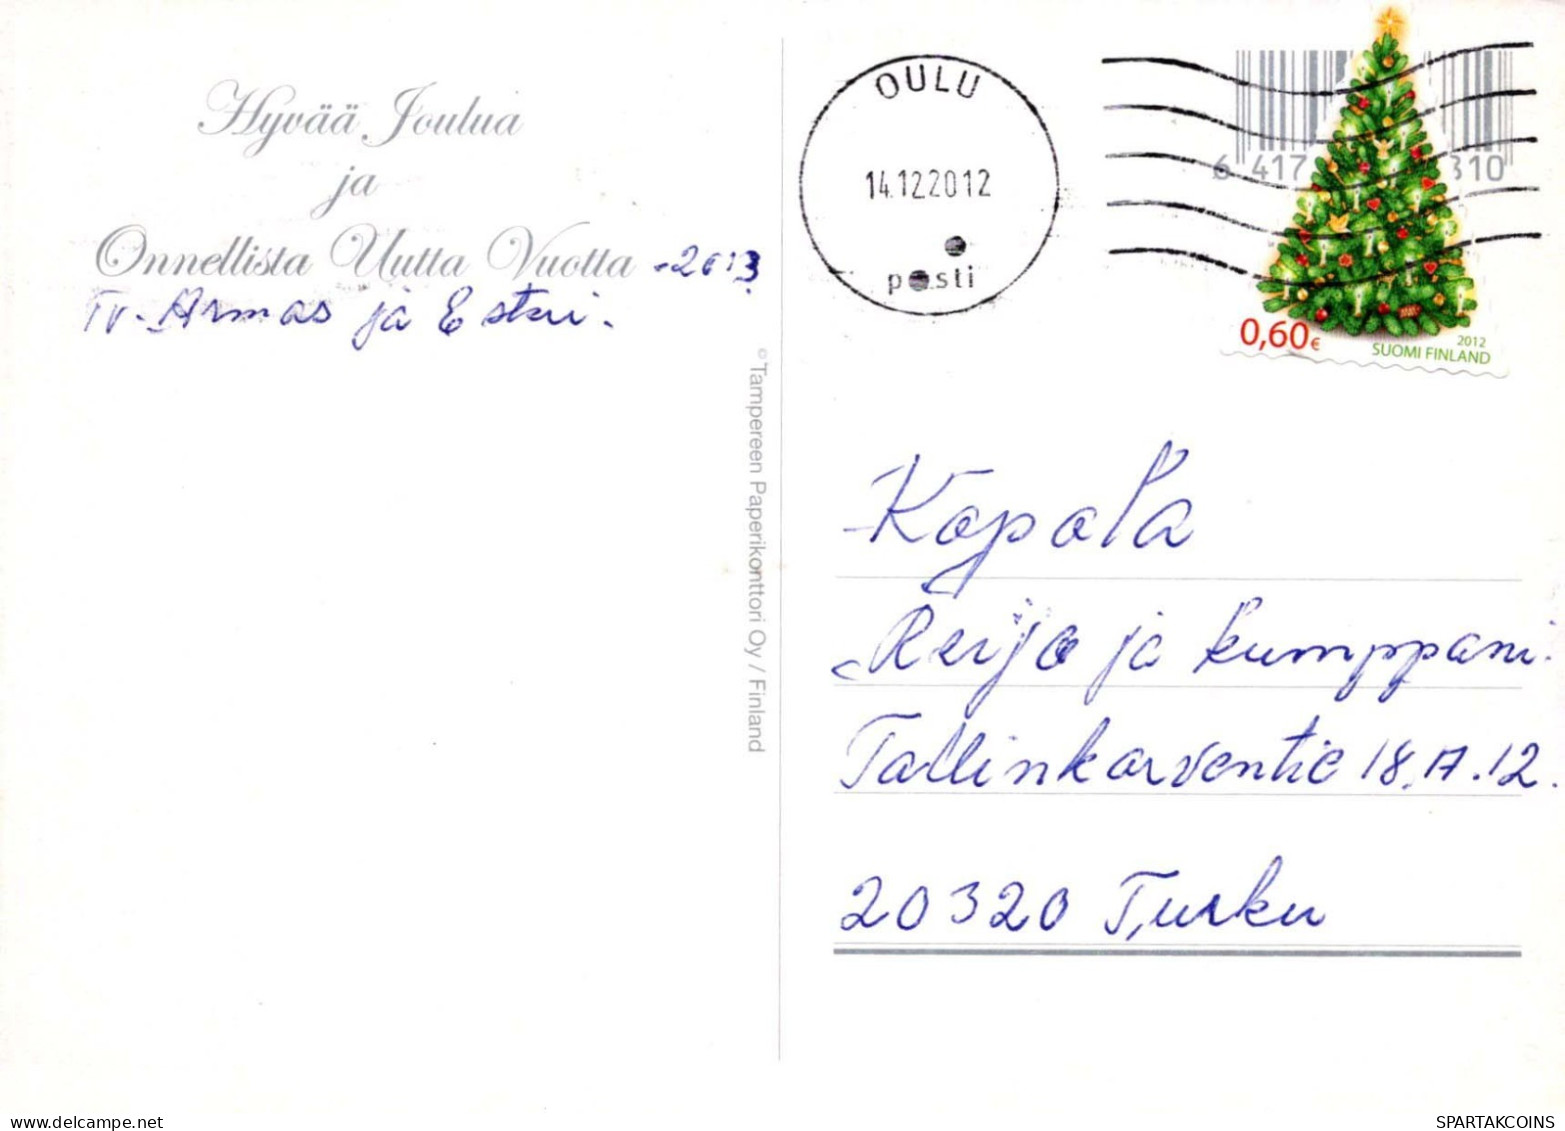 SANTA CLAUS Happy New Year Christmas GNOME Vintage Postcard CPSM #PBL898.A - Santa Claus